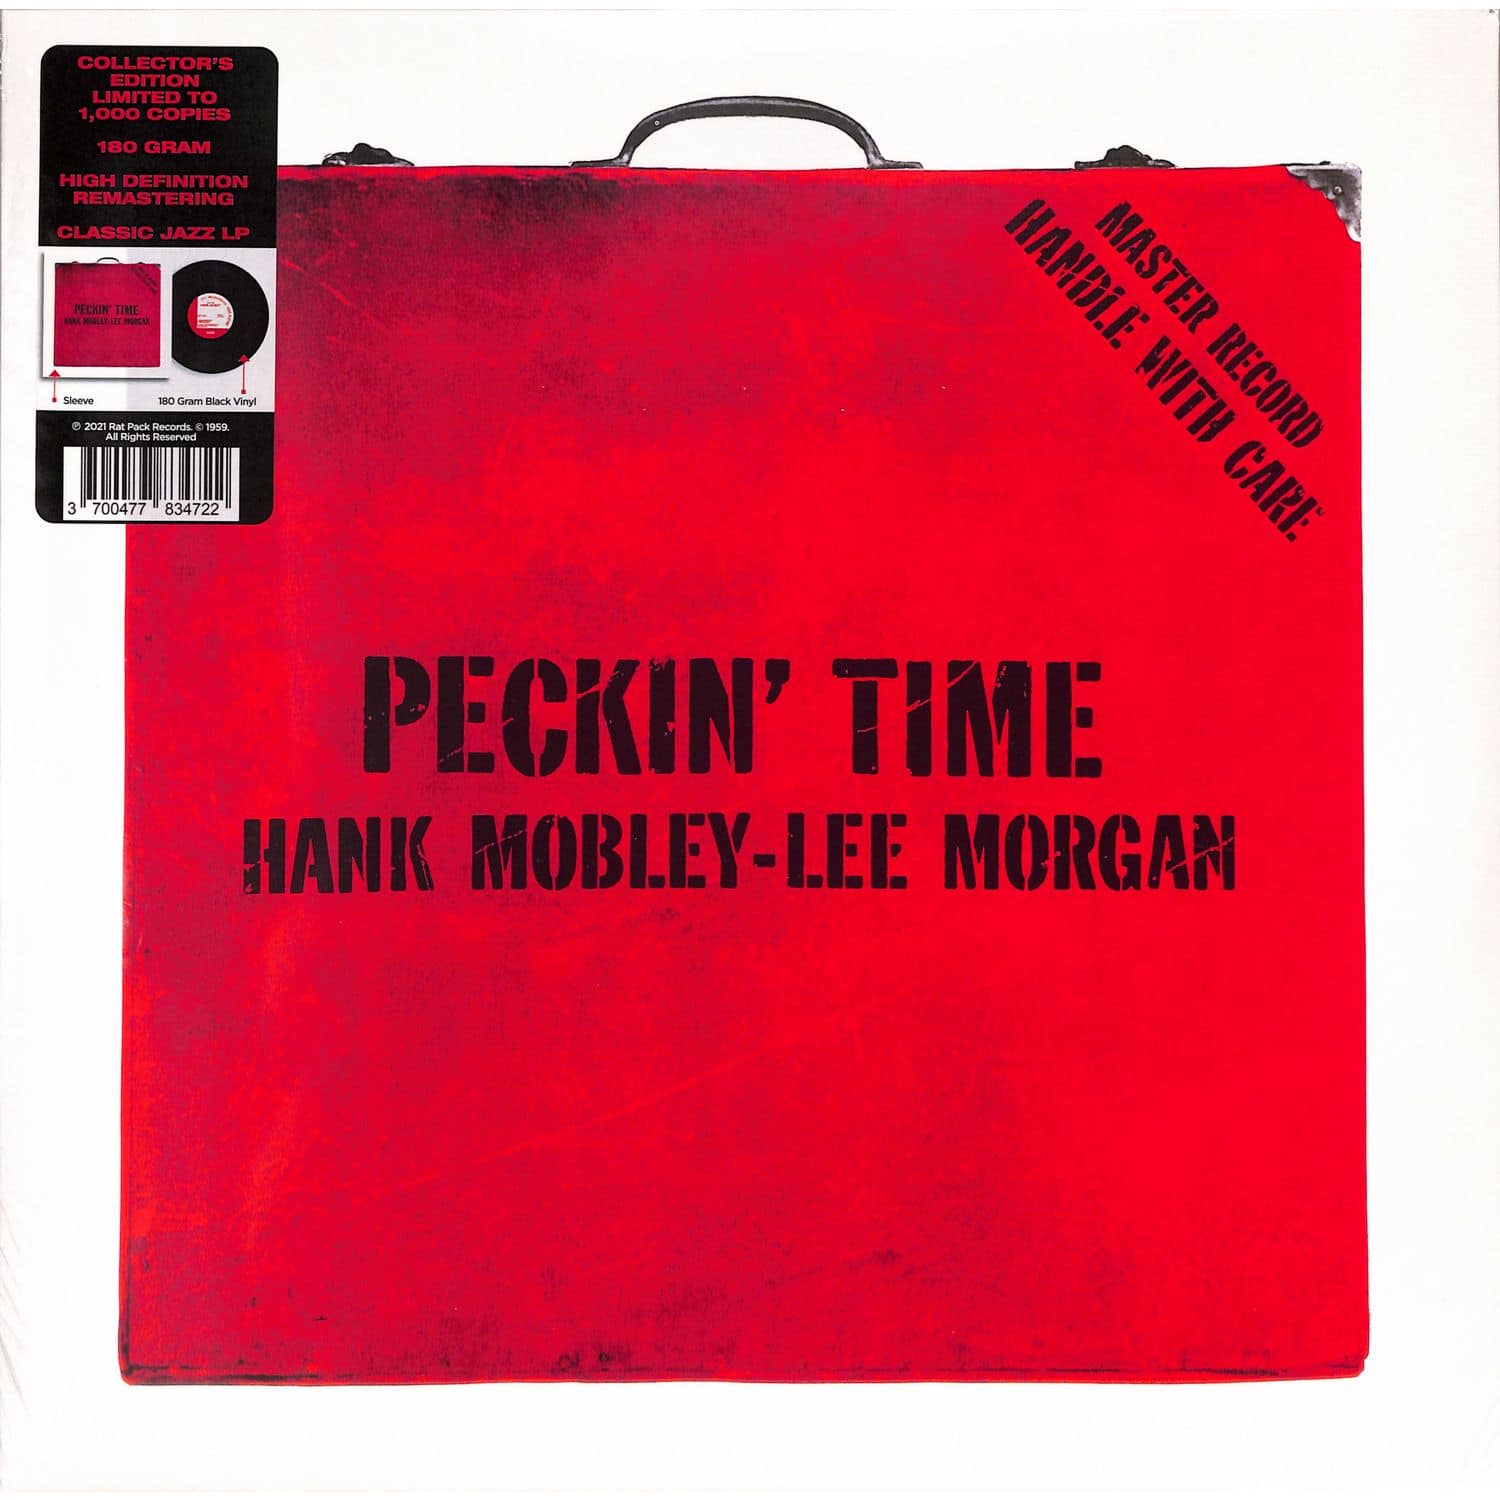  Hank Mobley & Lee Morgan - PECKIN TIME 